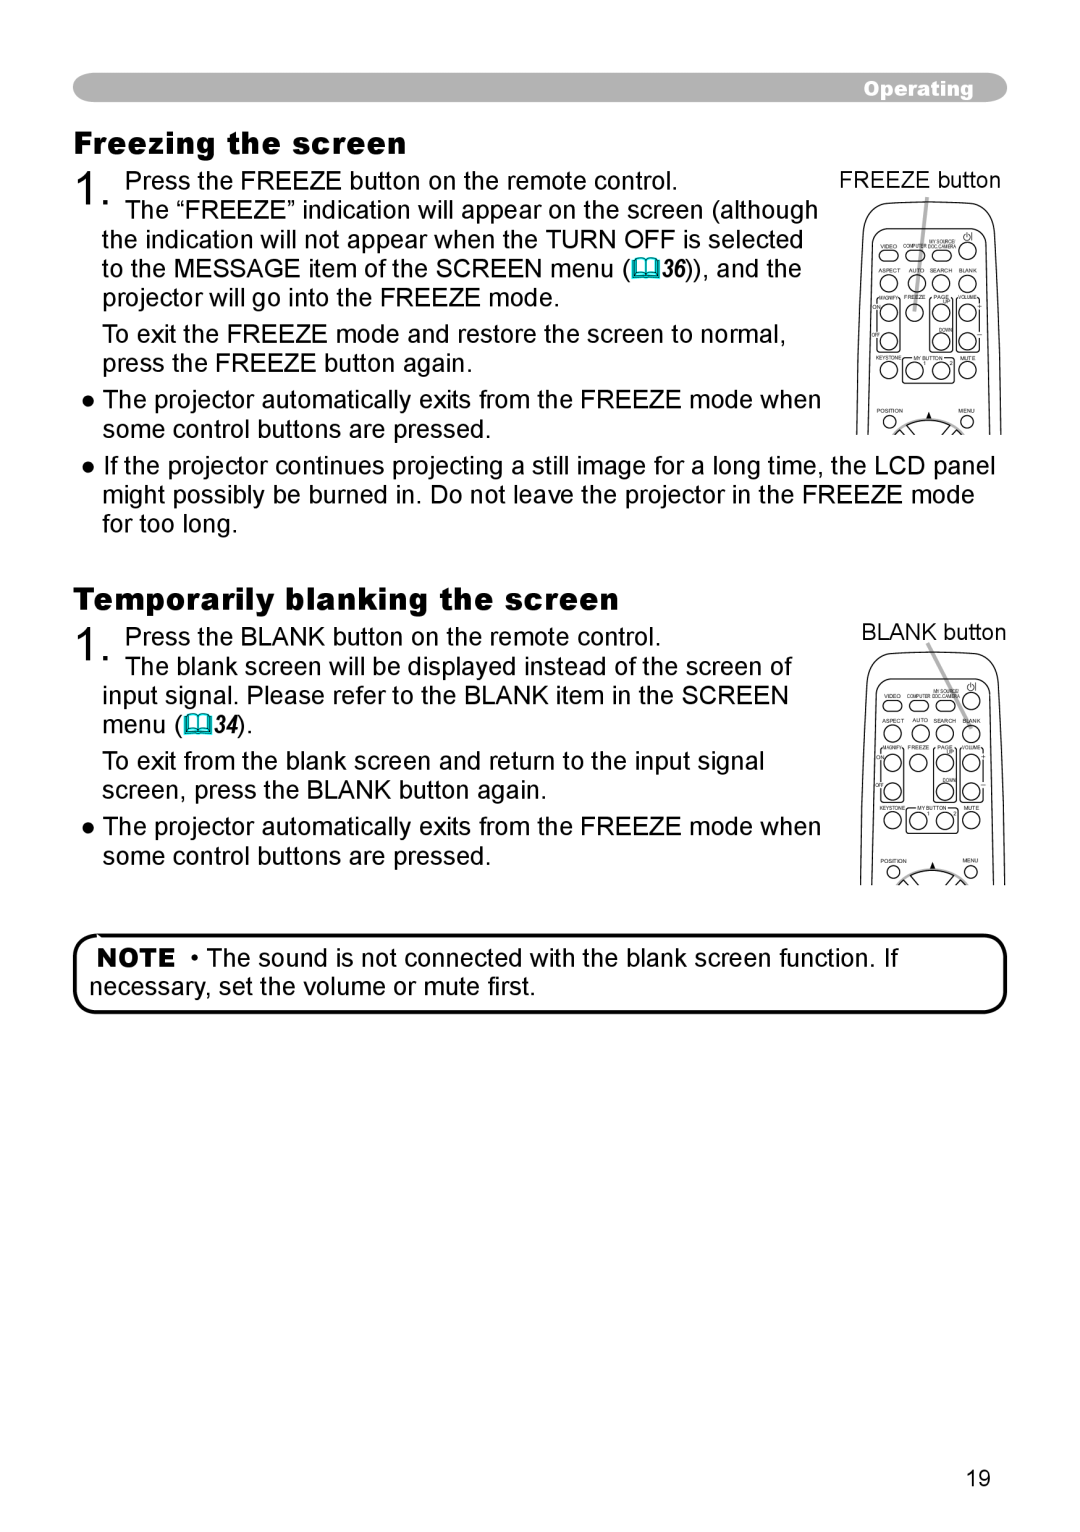 Dukane 8783 user manual Freezing the screen, Temporarily blanking the screen, FREEZE button, BLANK button 